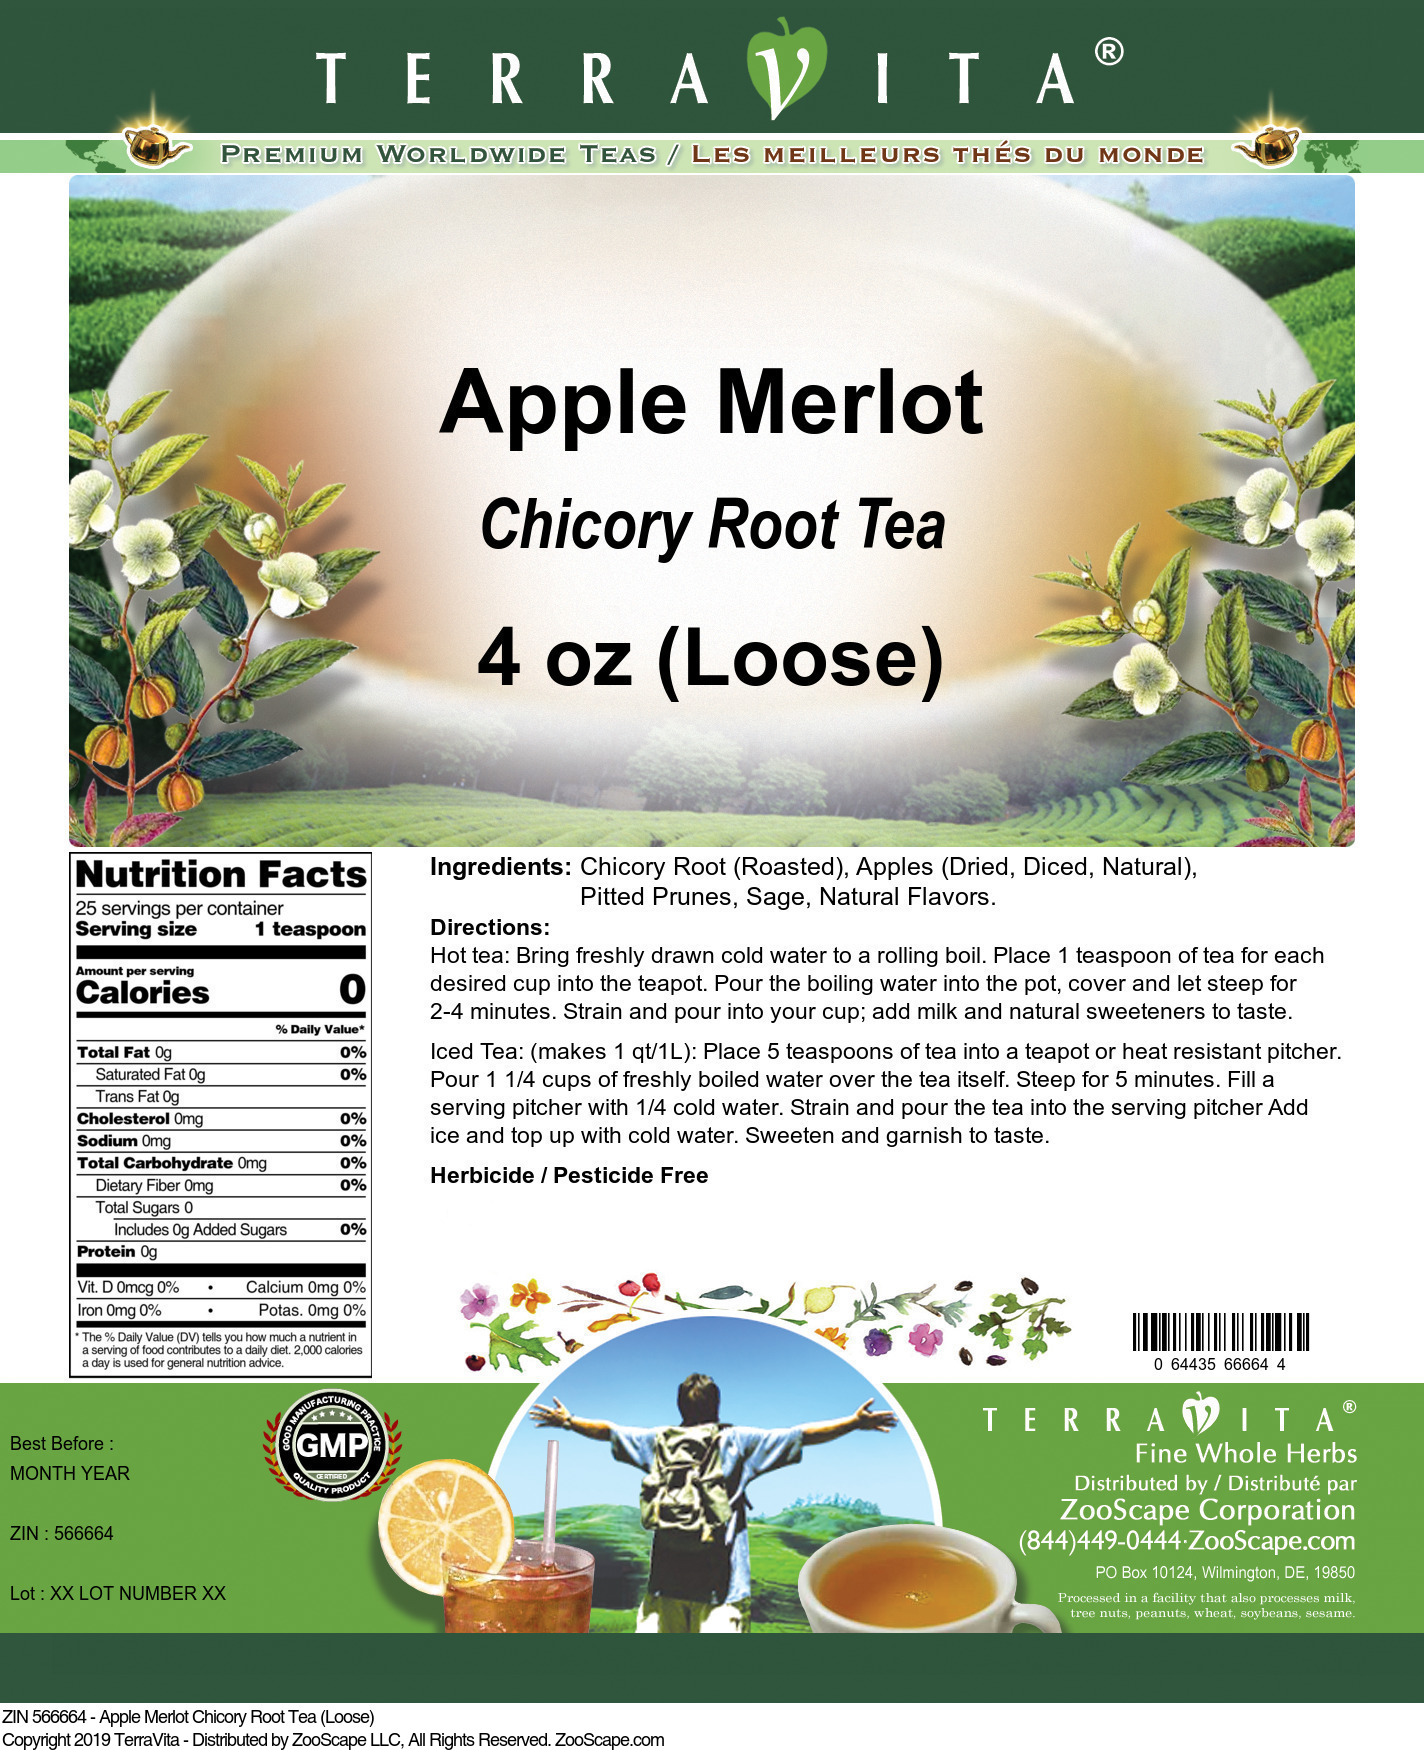 Apple Merlot Chicory Root Tea (Loose) - Label